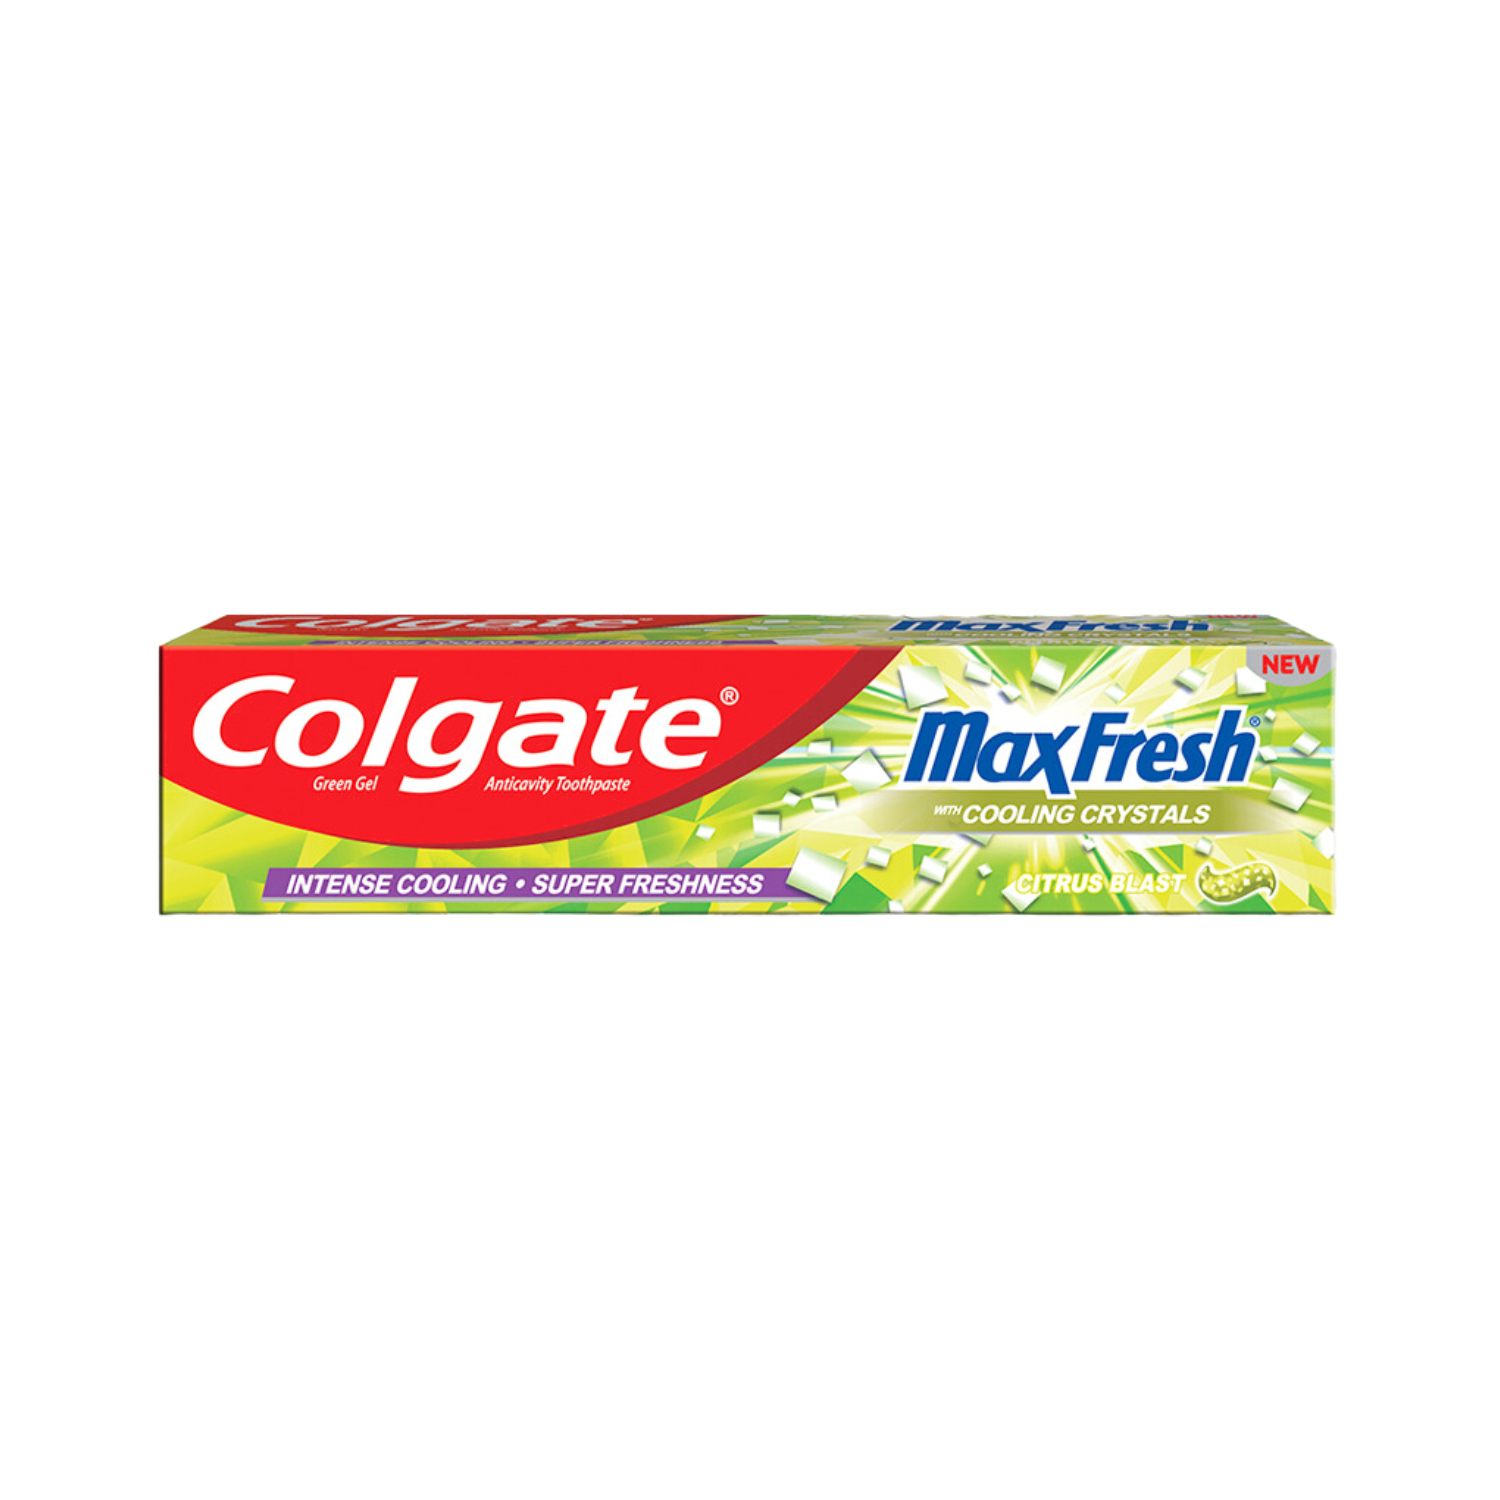 colgate-maxfresh-citrus-blast-toothpaste-125g